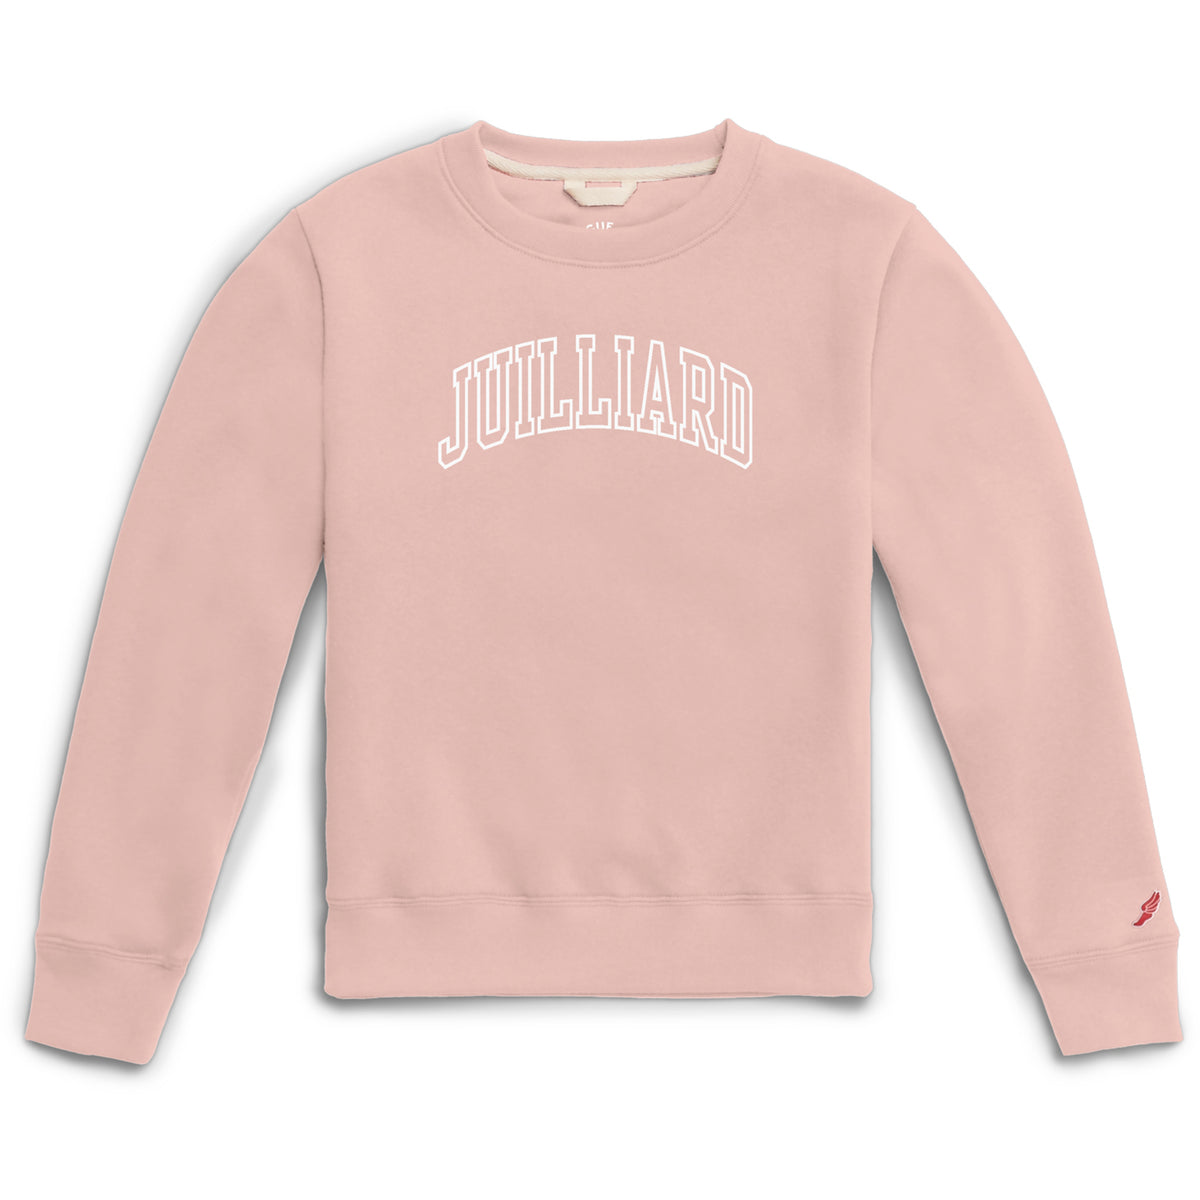 Sweatshirt: Juilliard Crew YOUTH